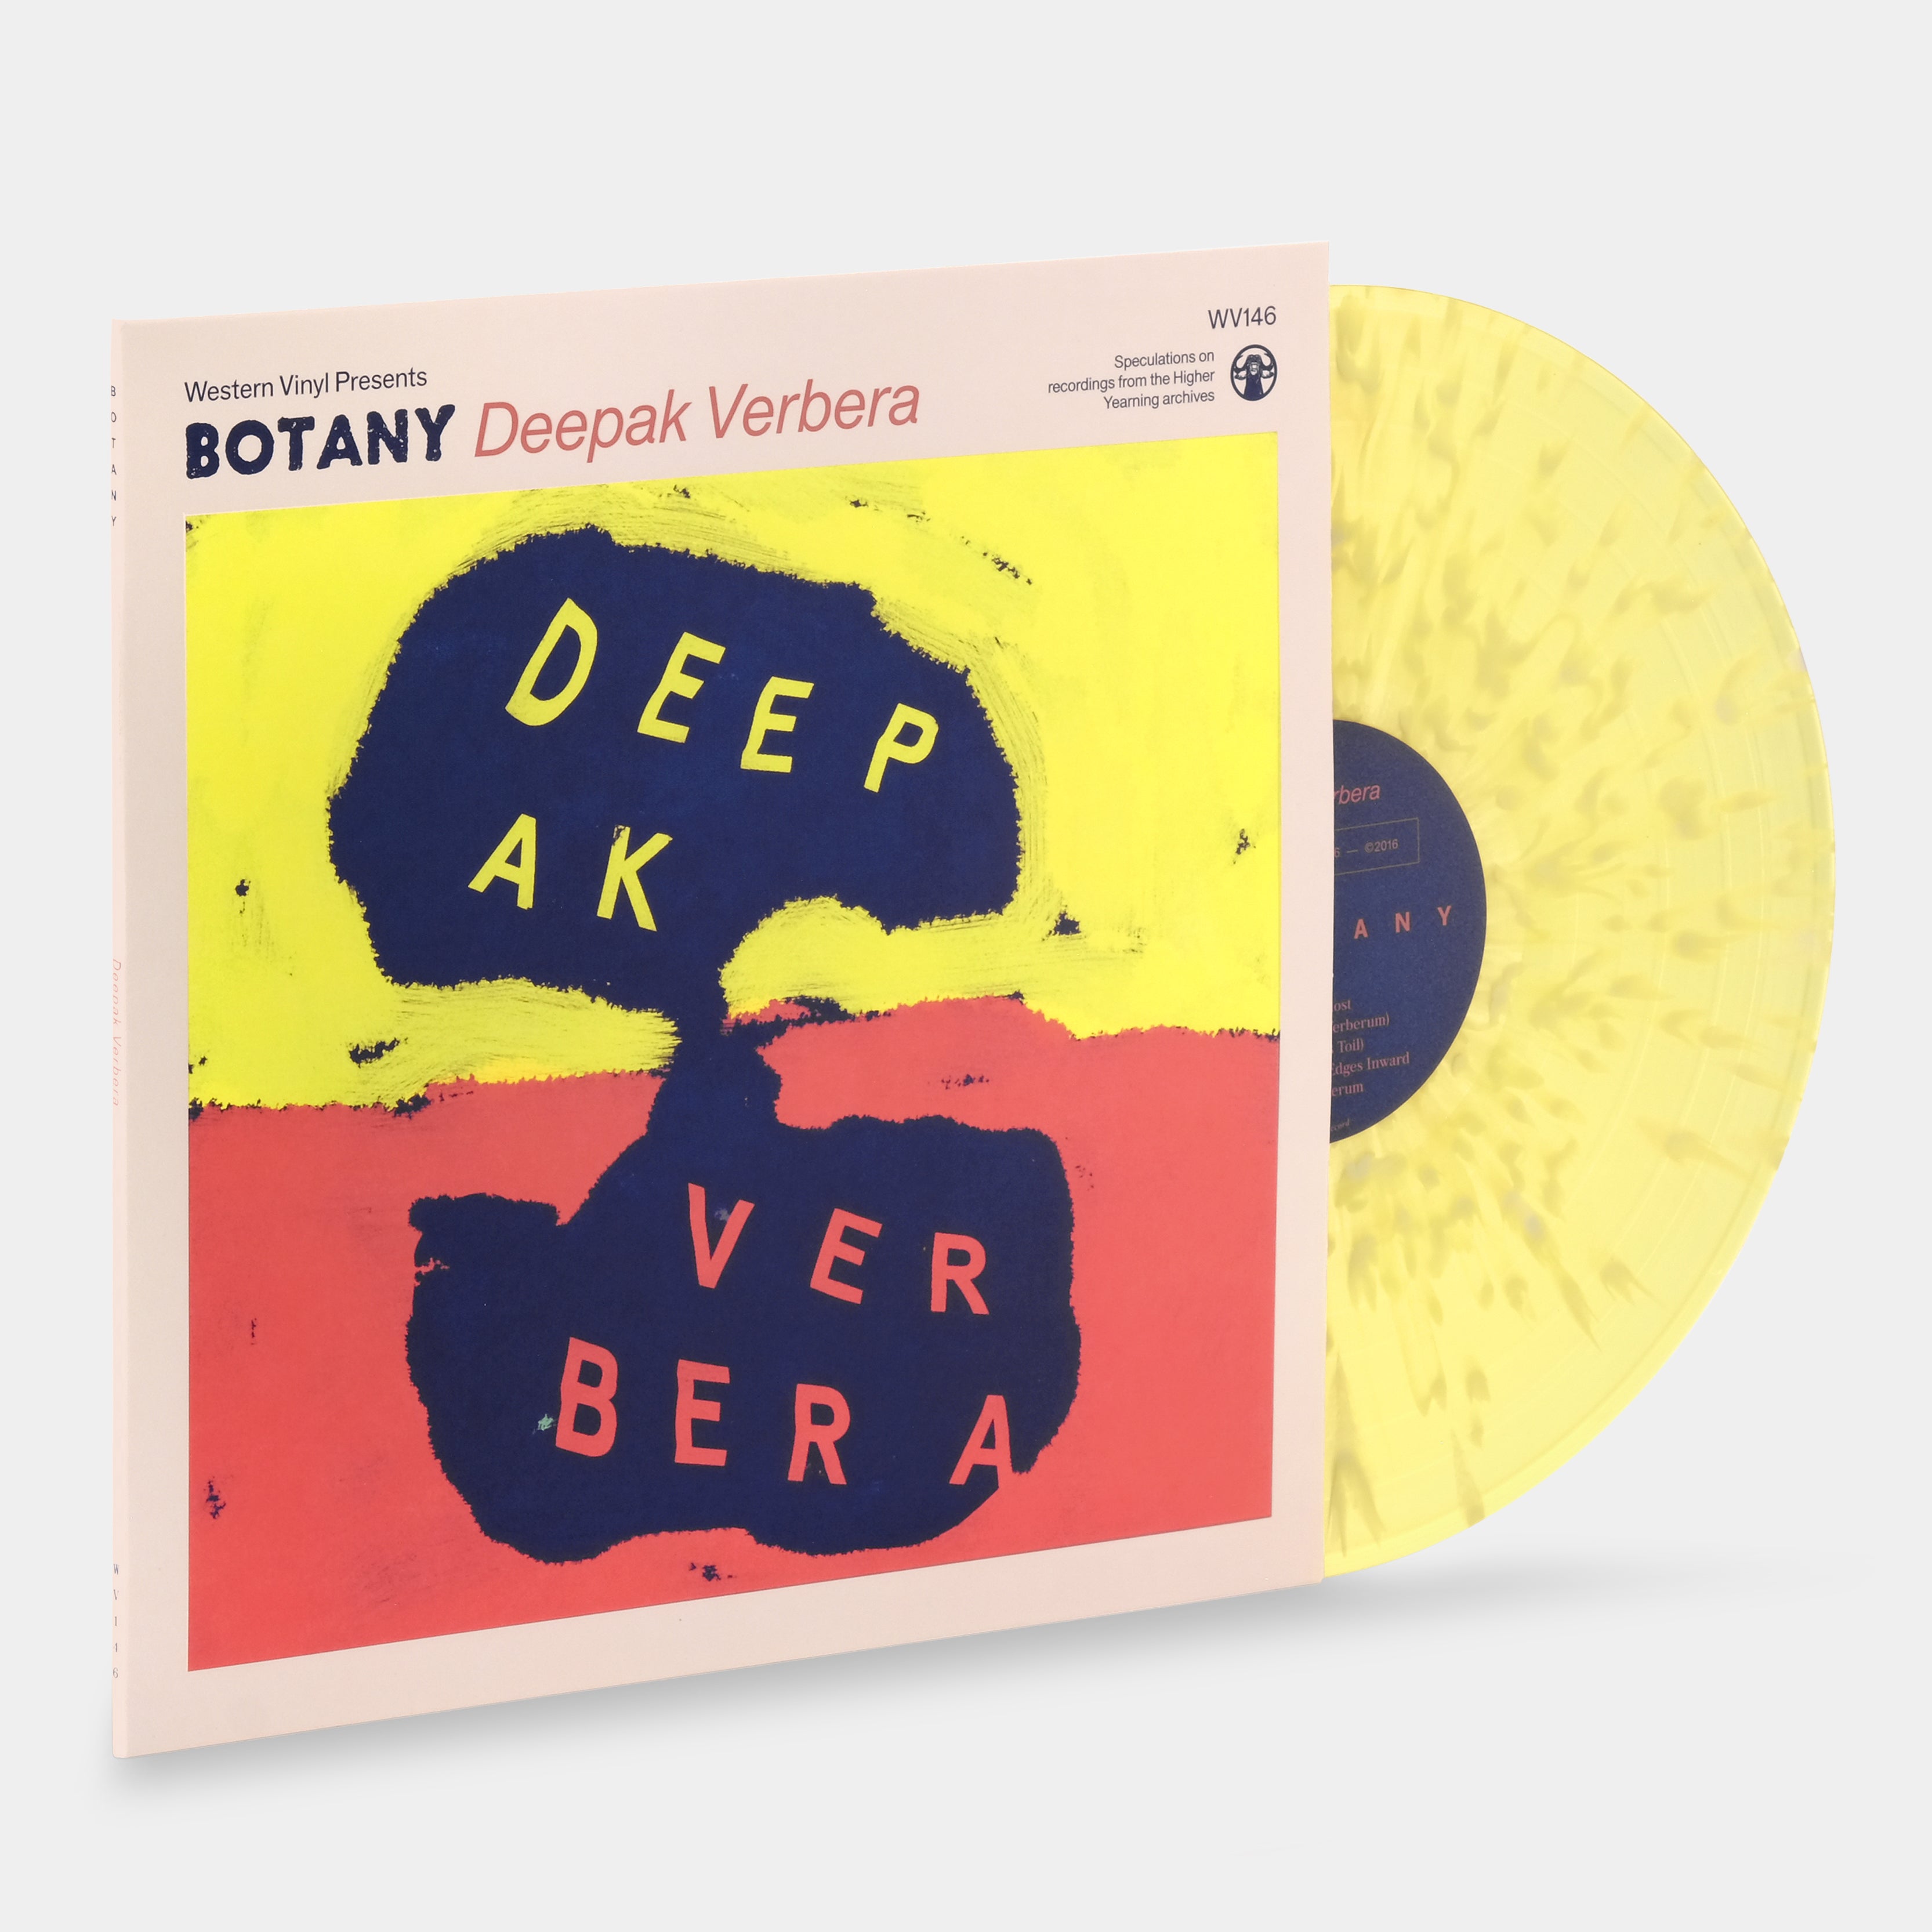 Botany - Deepak Verbera LP Yellow w/ White Splatter Vinyl Record